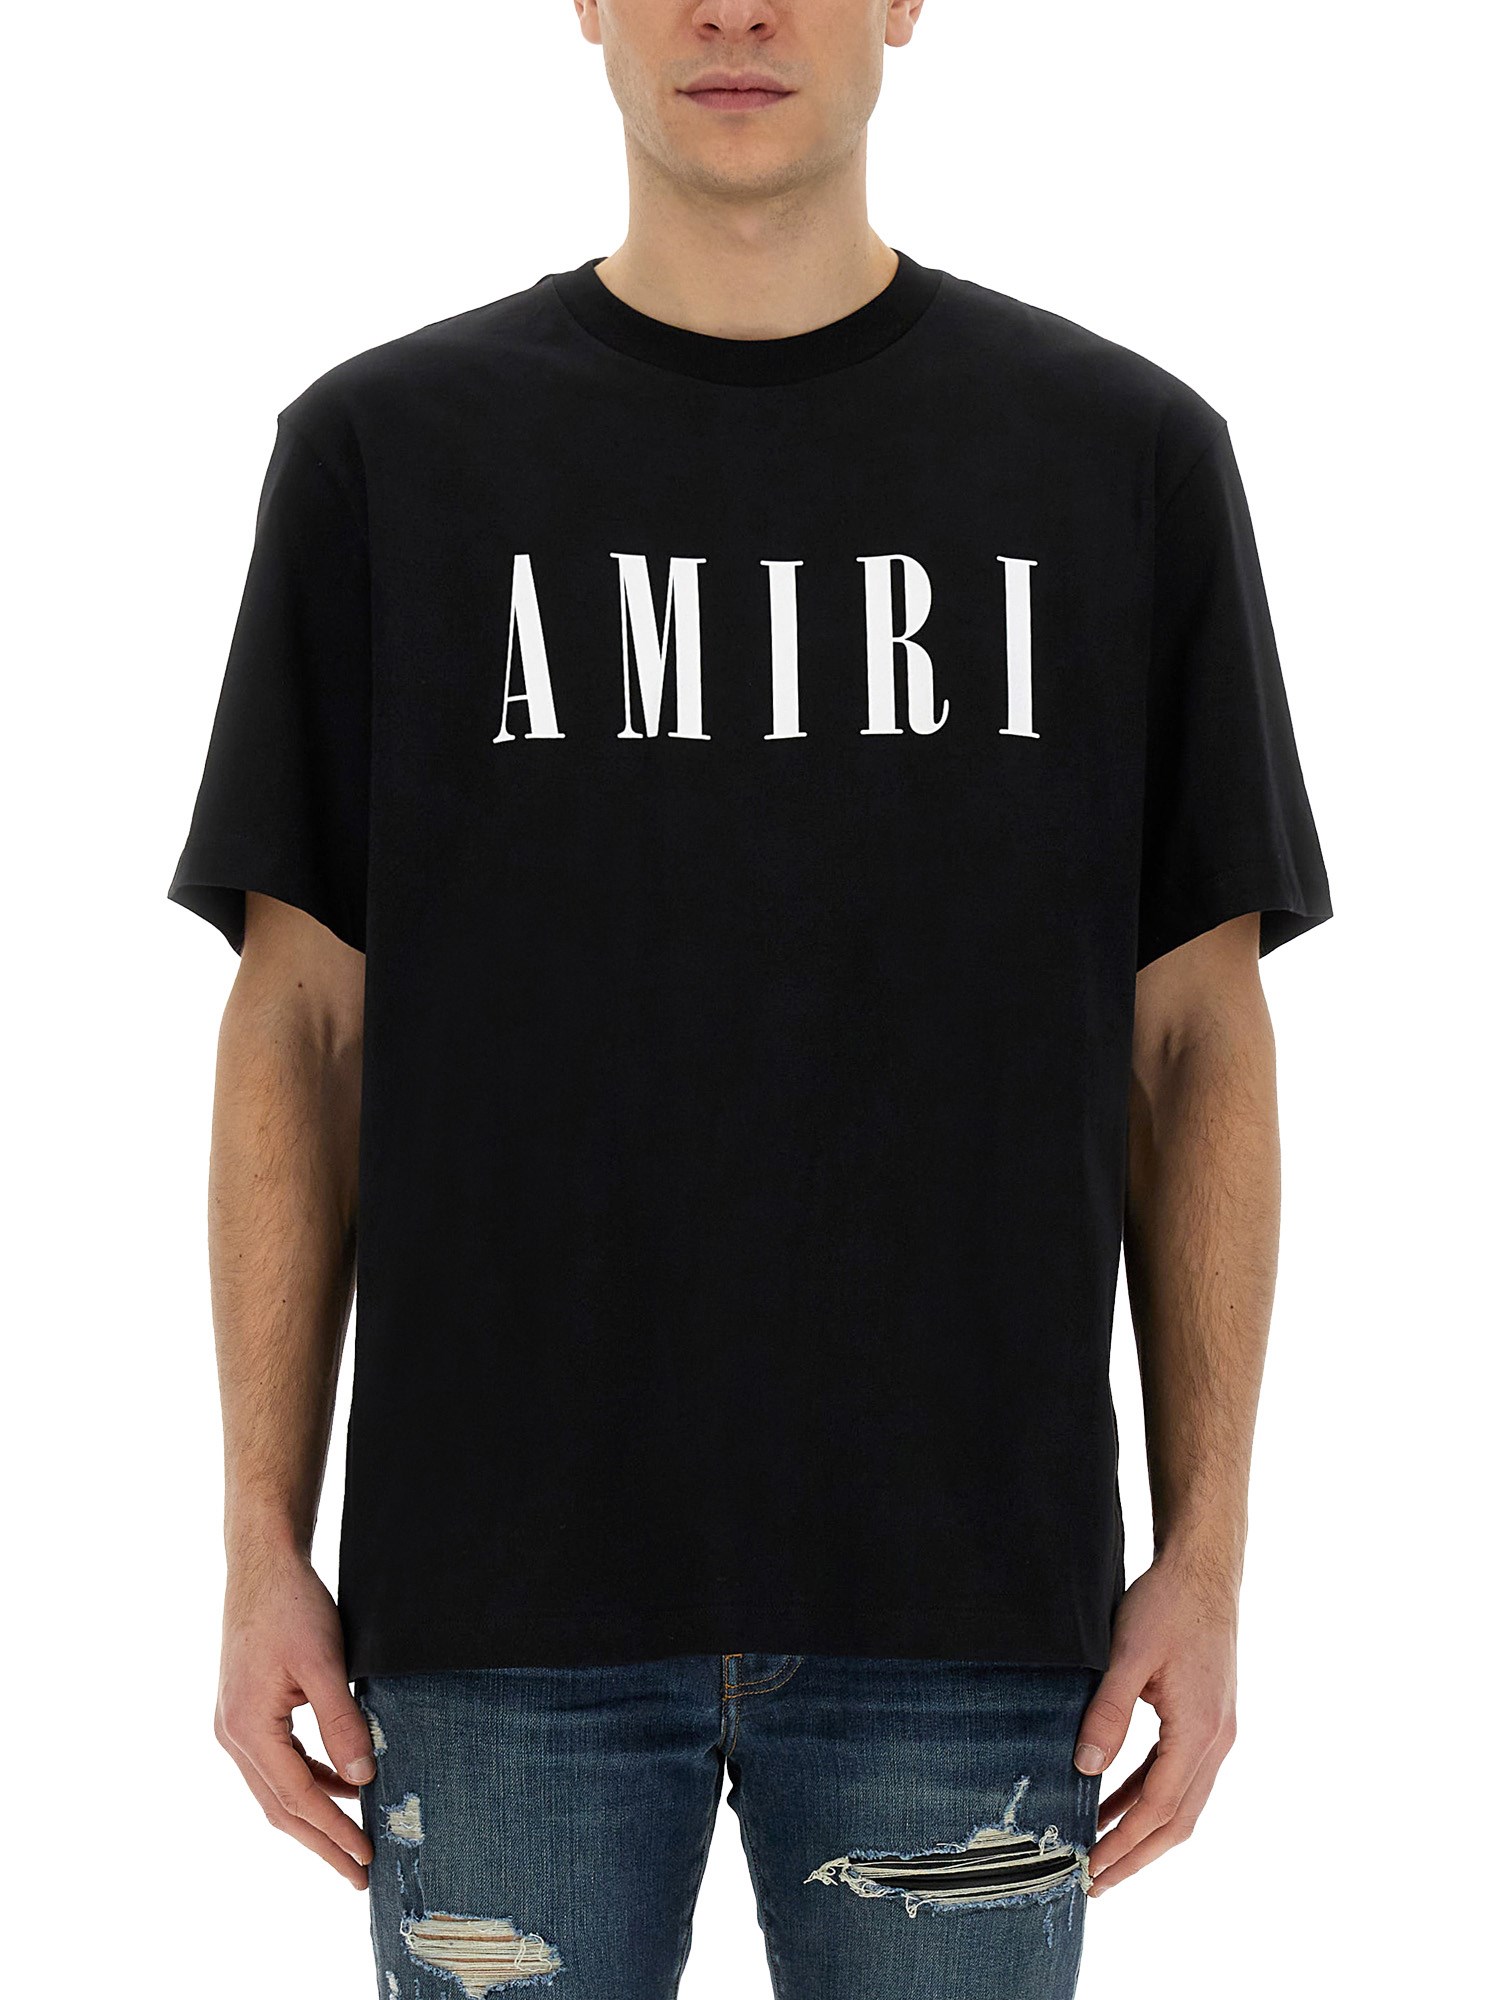 amiri t-shirt with logo